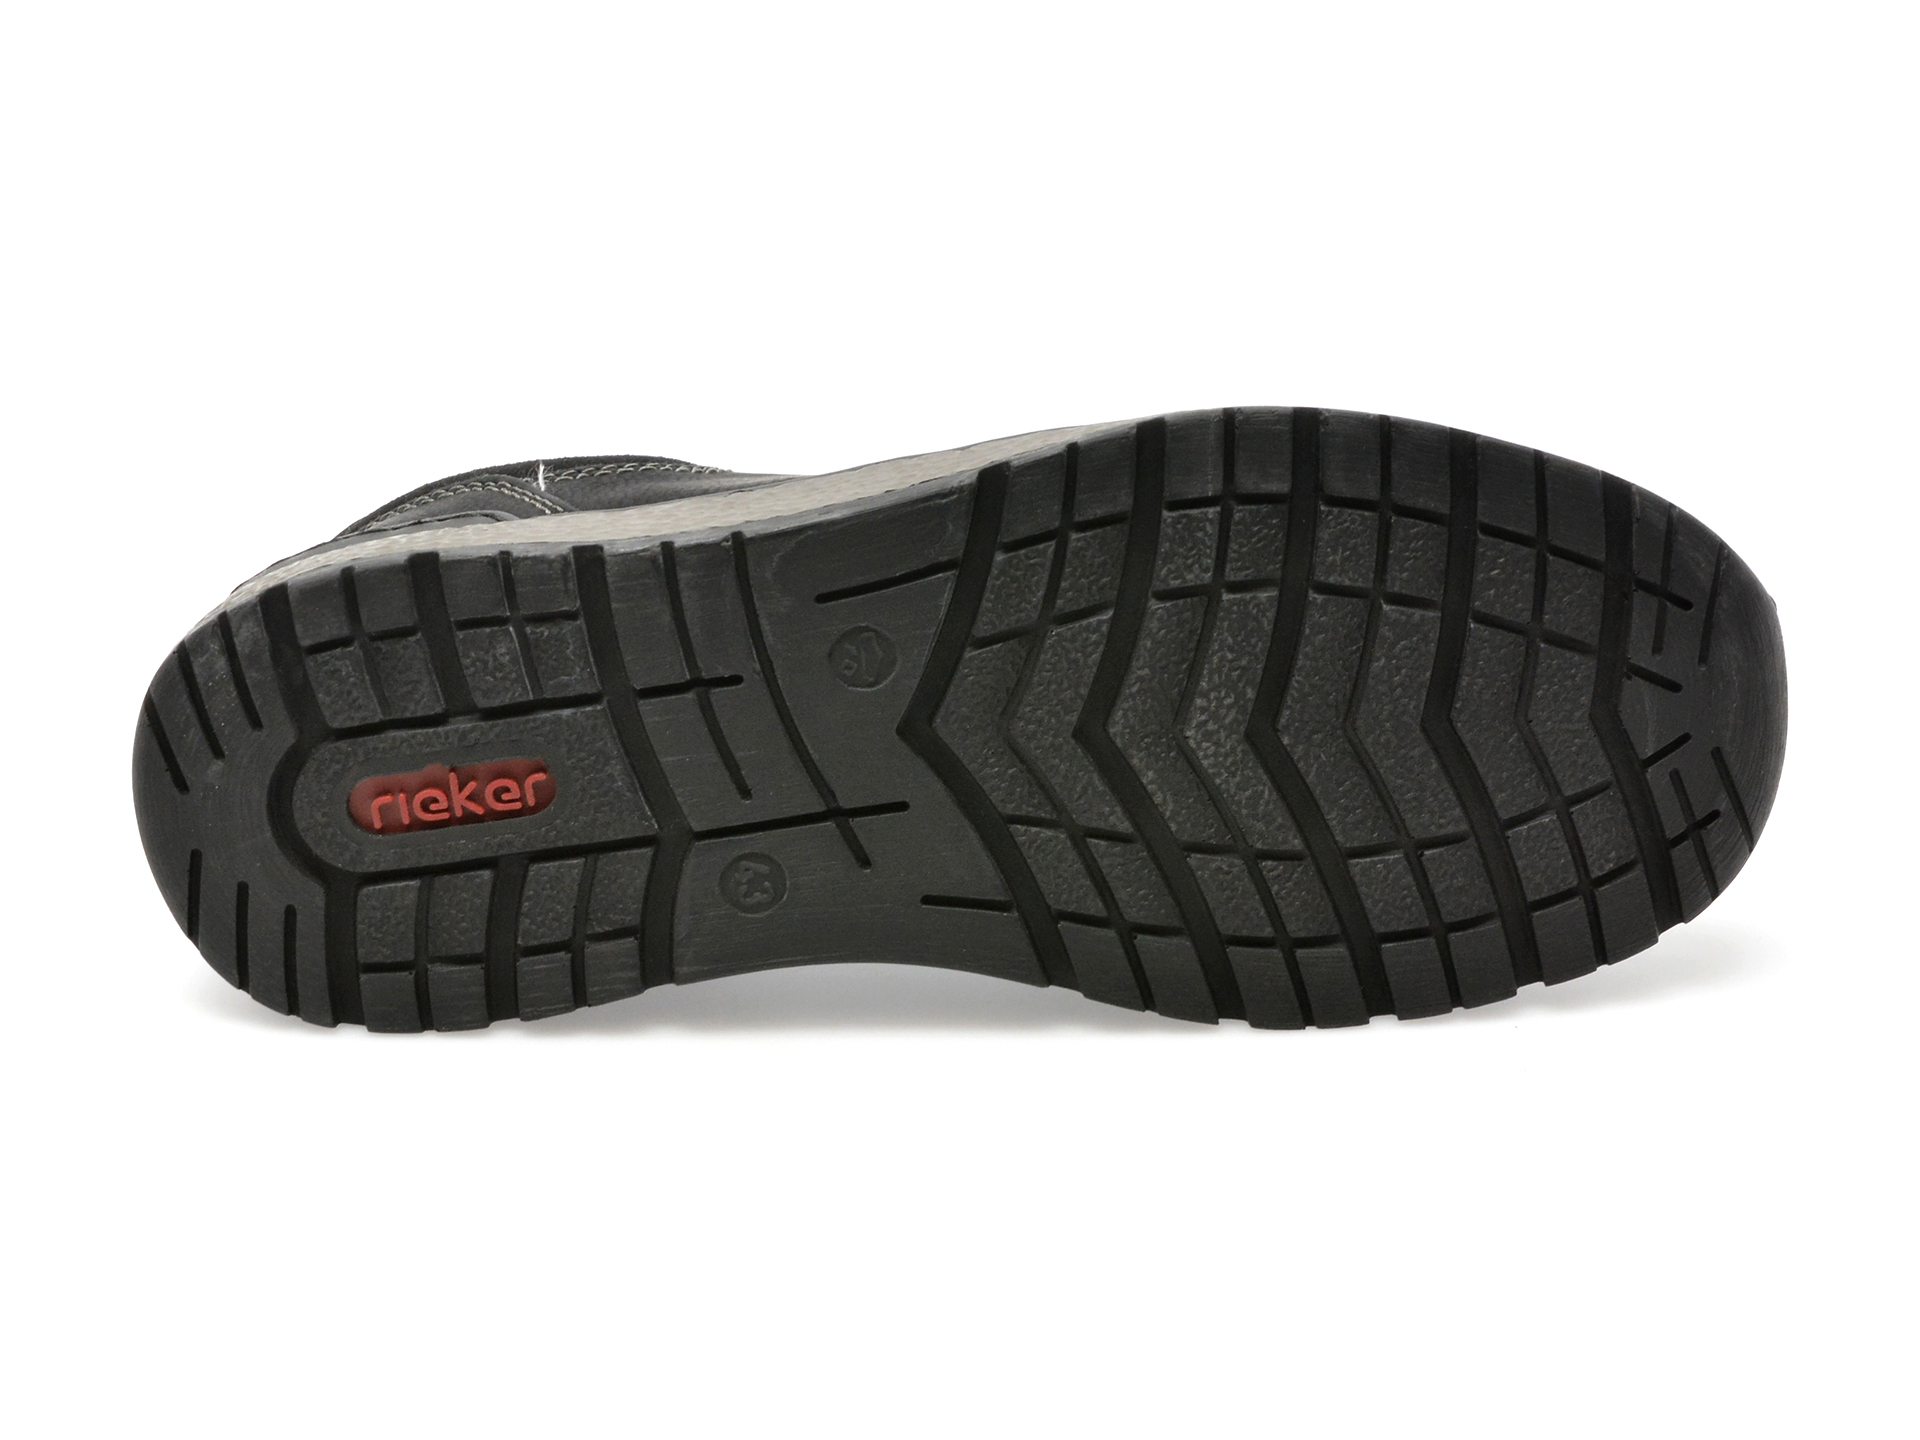 Pantofi RIEKER negri, B9062, din piele naturala